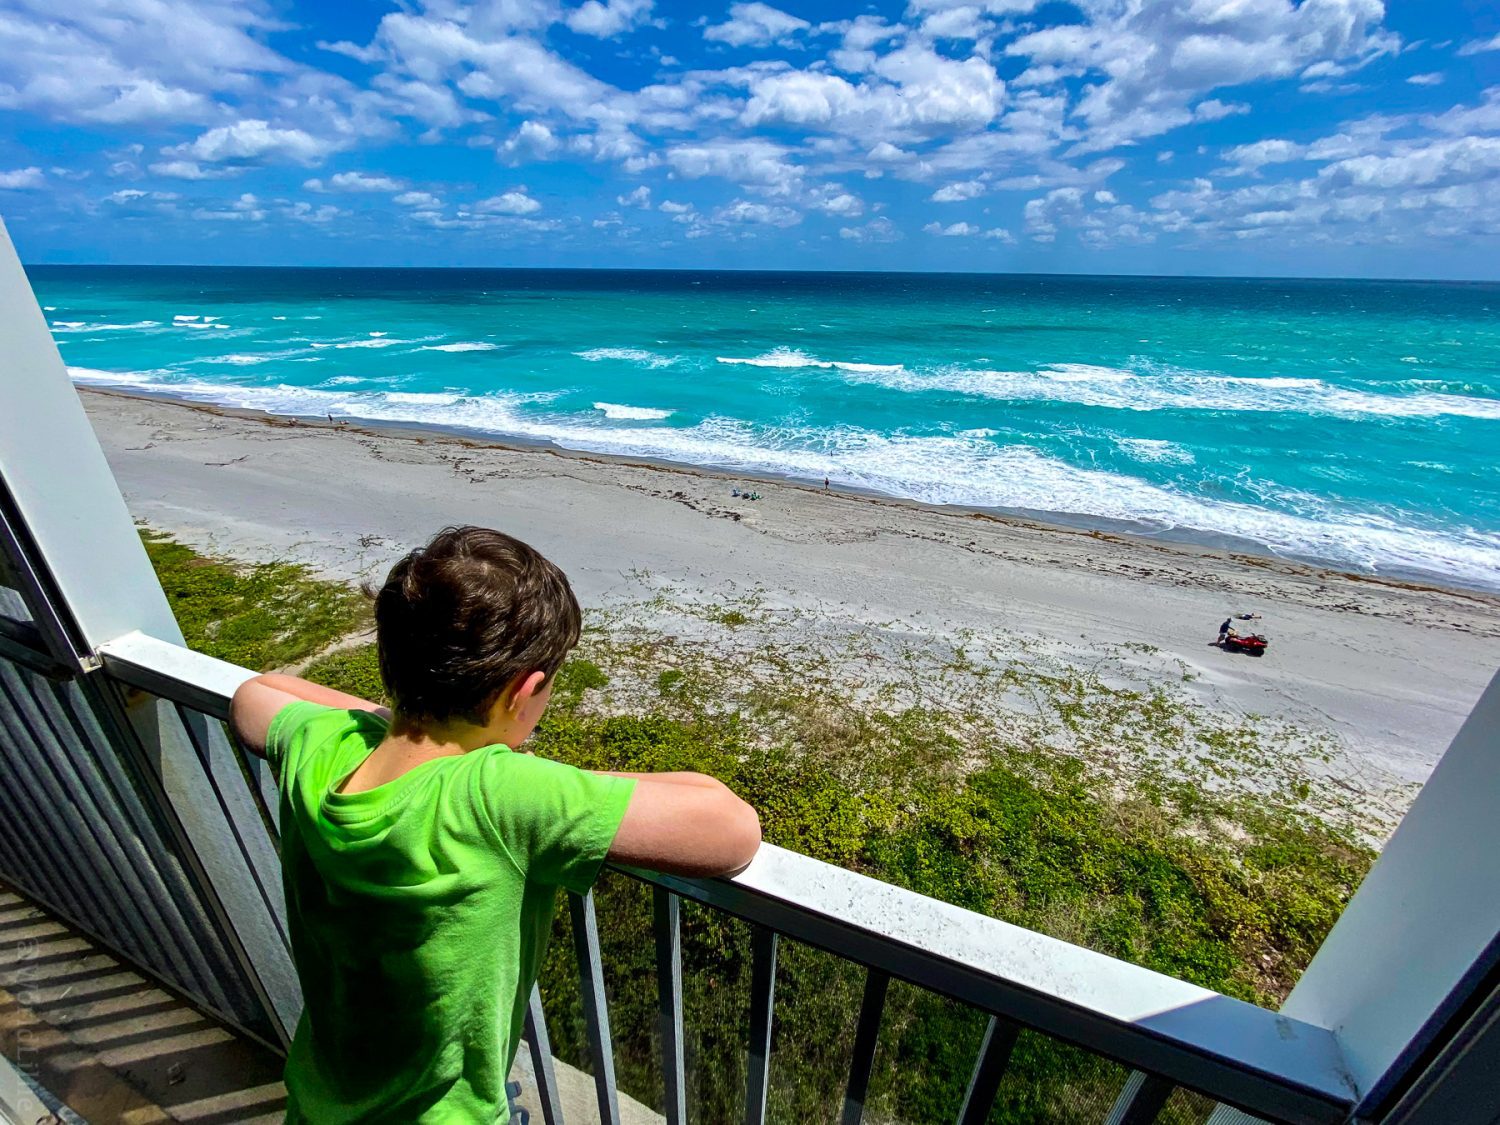 Looking out at Juno Beach, Florida.